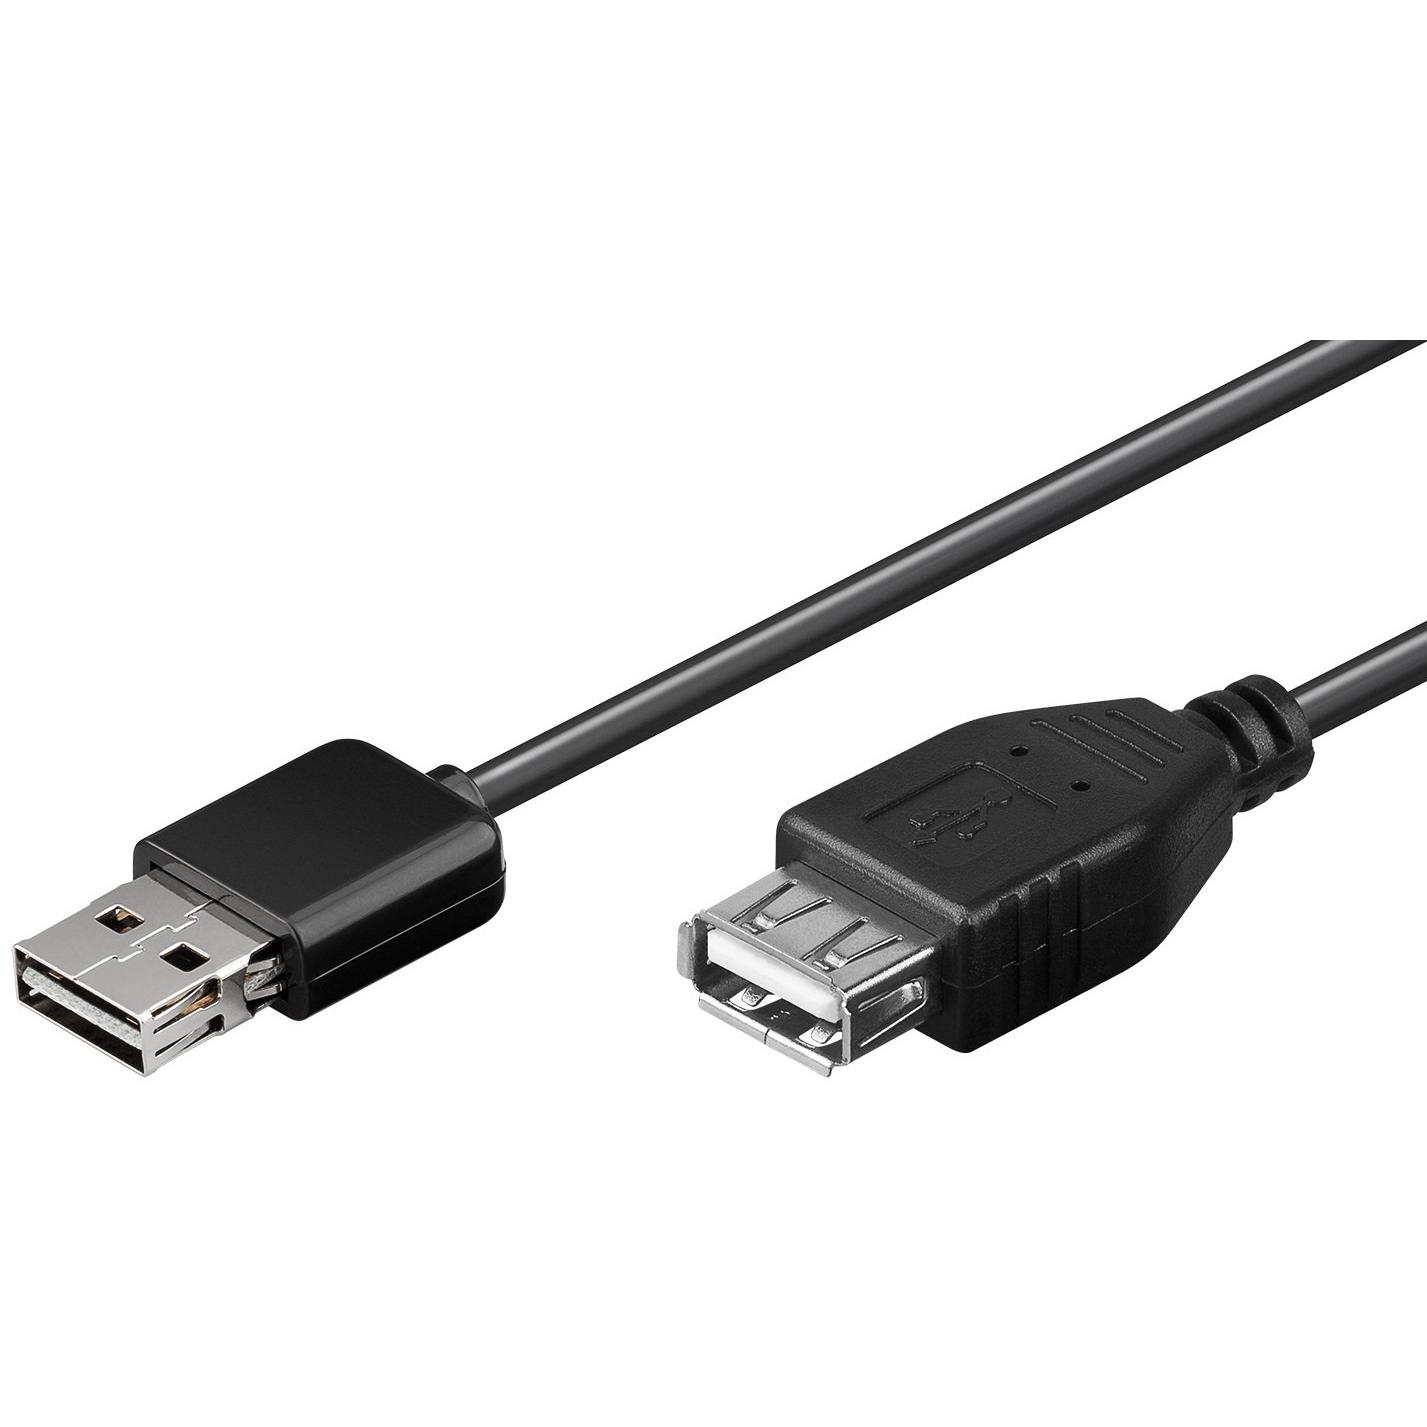 Prolunga USB 2.0 Hi-Speed A Maschio / A Femmina 0.3m